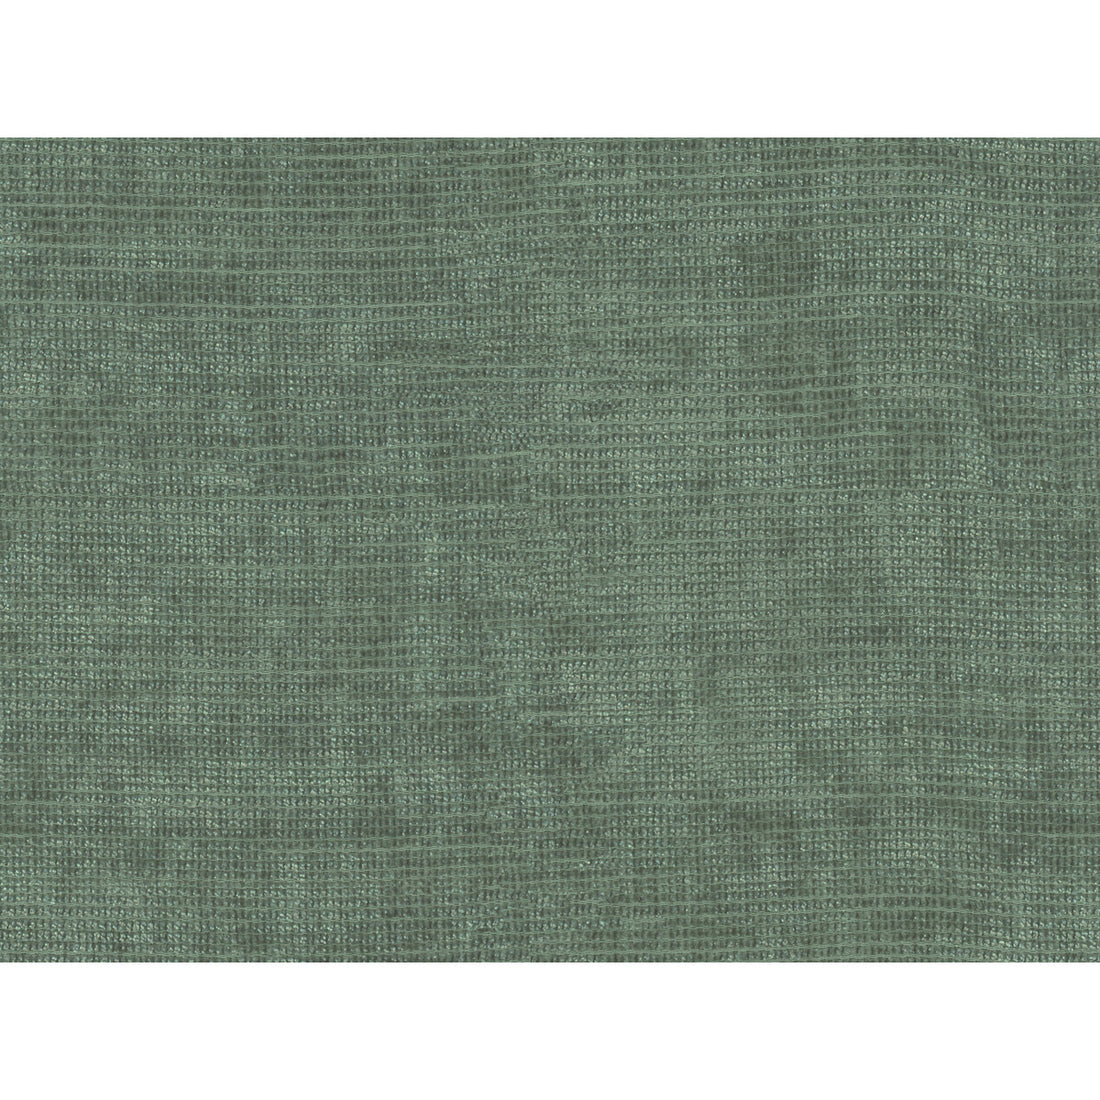 Kravet Smart fabric in 34191-135 color - pattern 34191.135.0 - by Kravet Smart